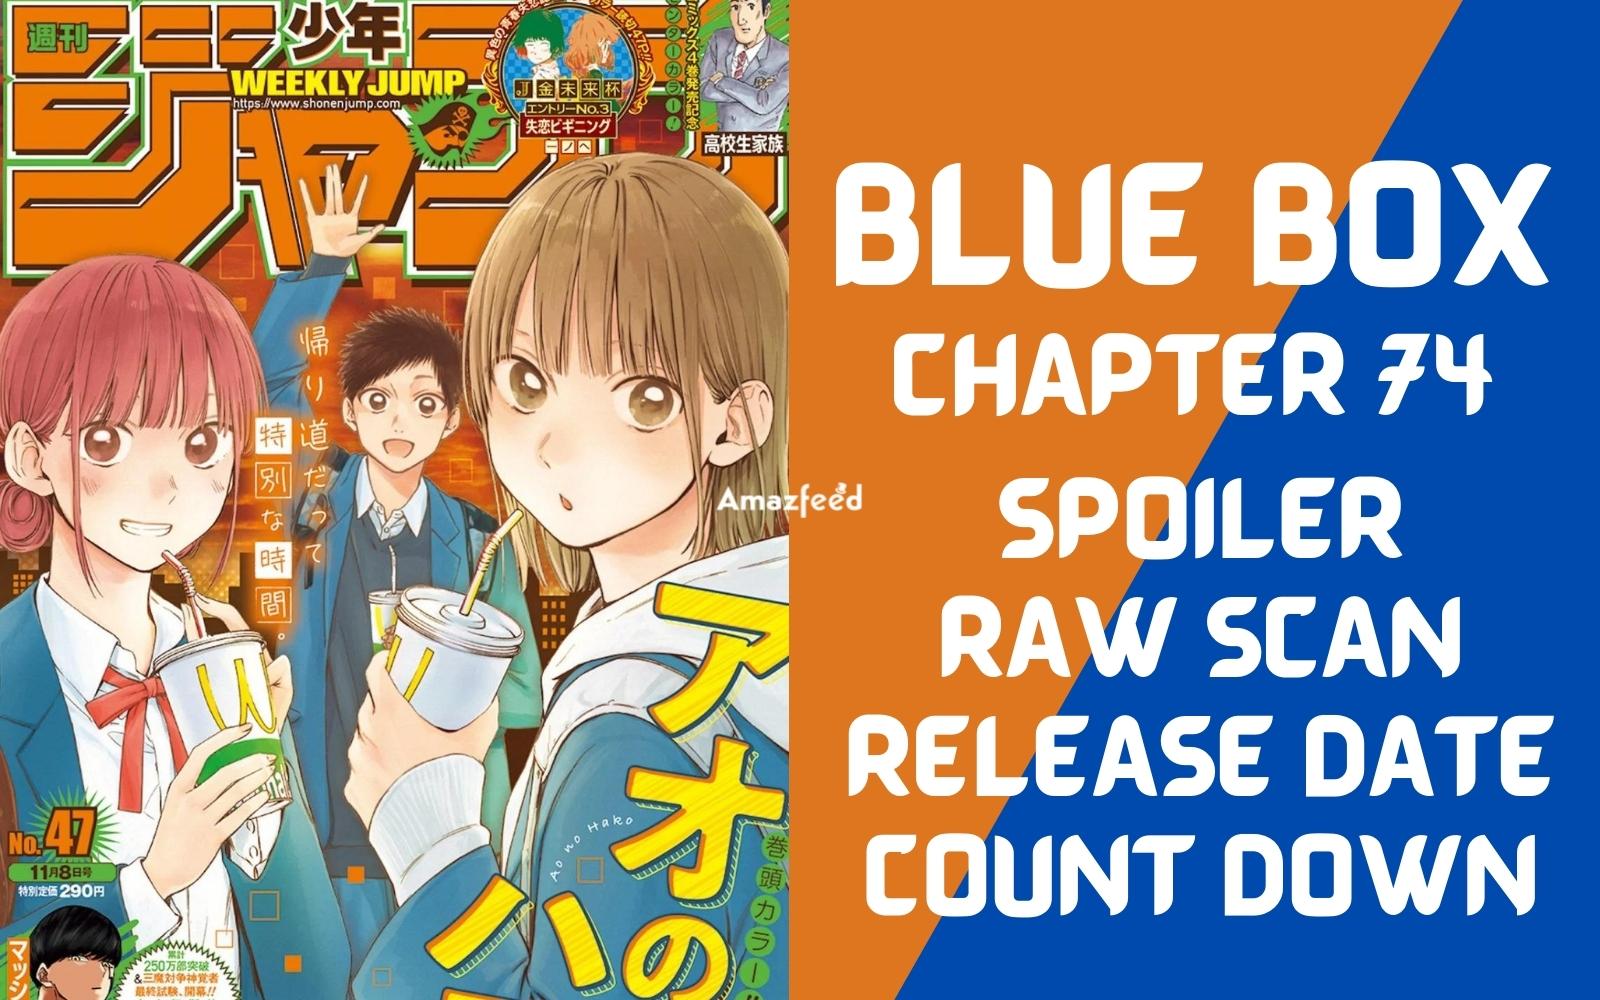 Tensei Shitara Slime Datta Ken Chapter 112 Reddit Spoiler, Raw Scan, Color  Page, Release Date » Amazfeed